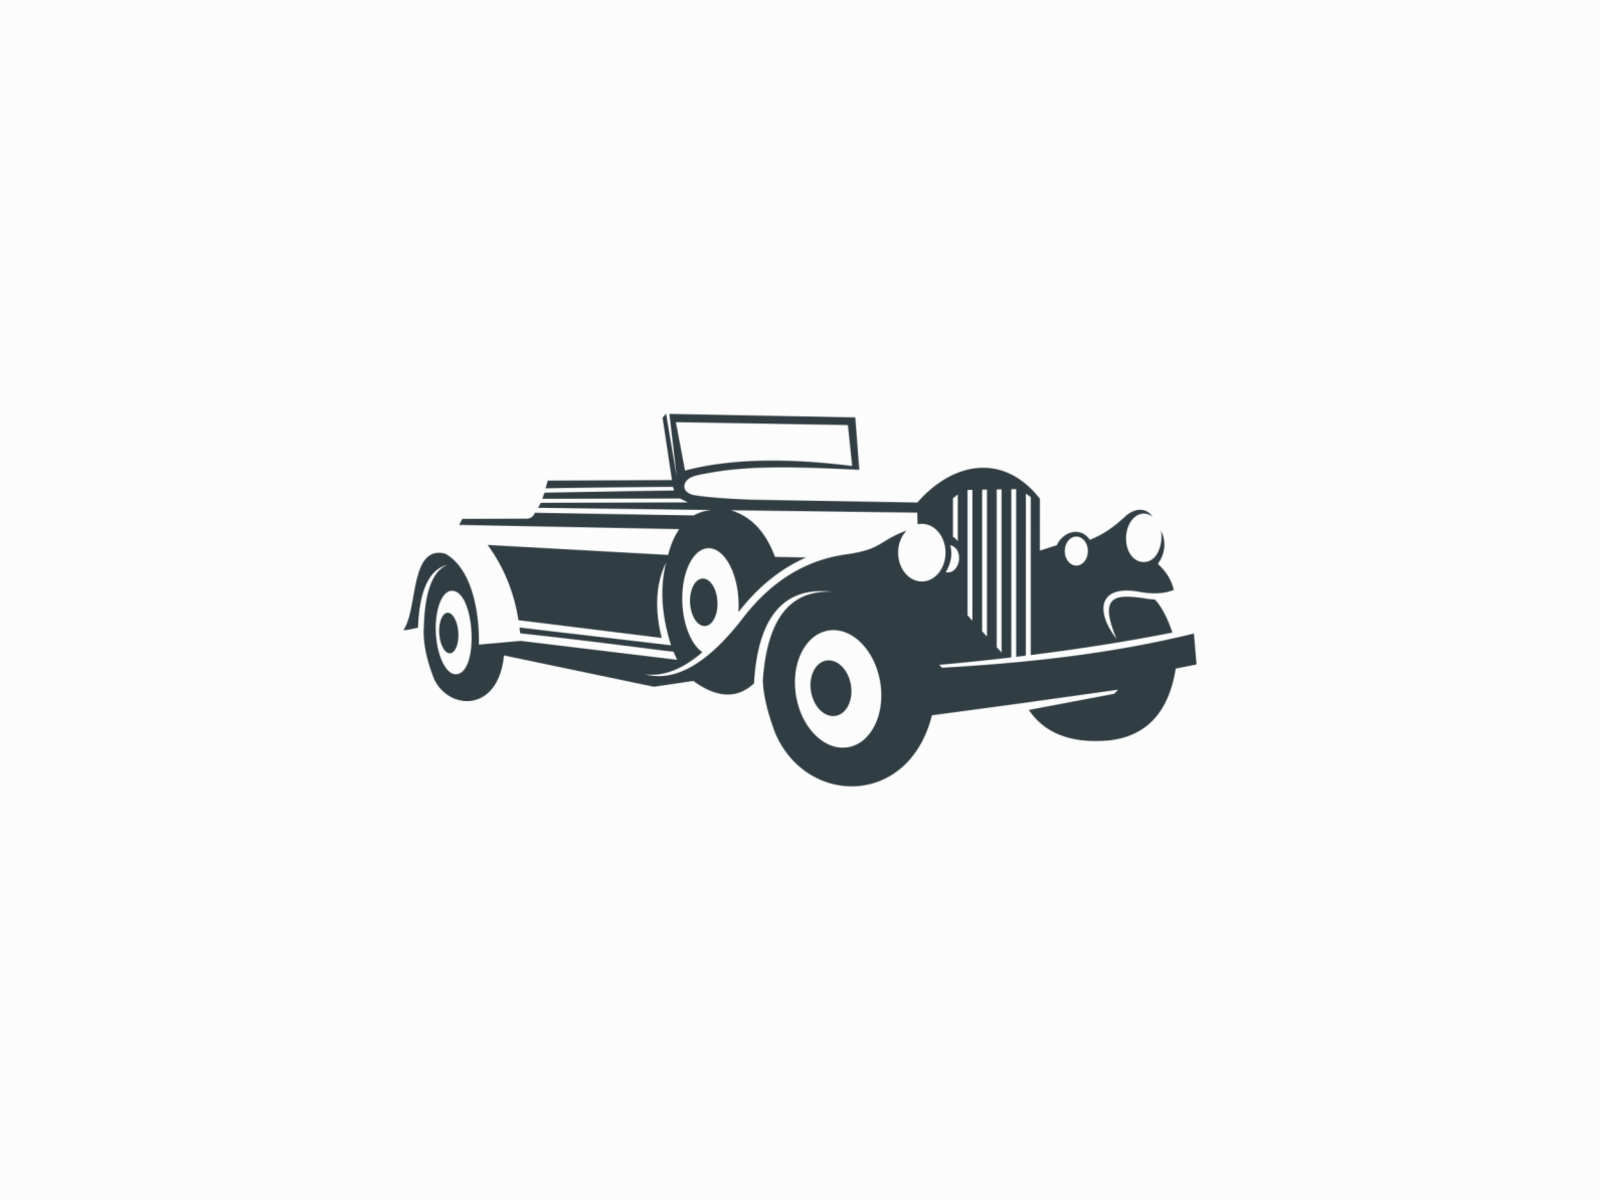 classic car logo